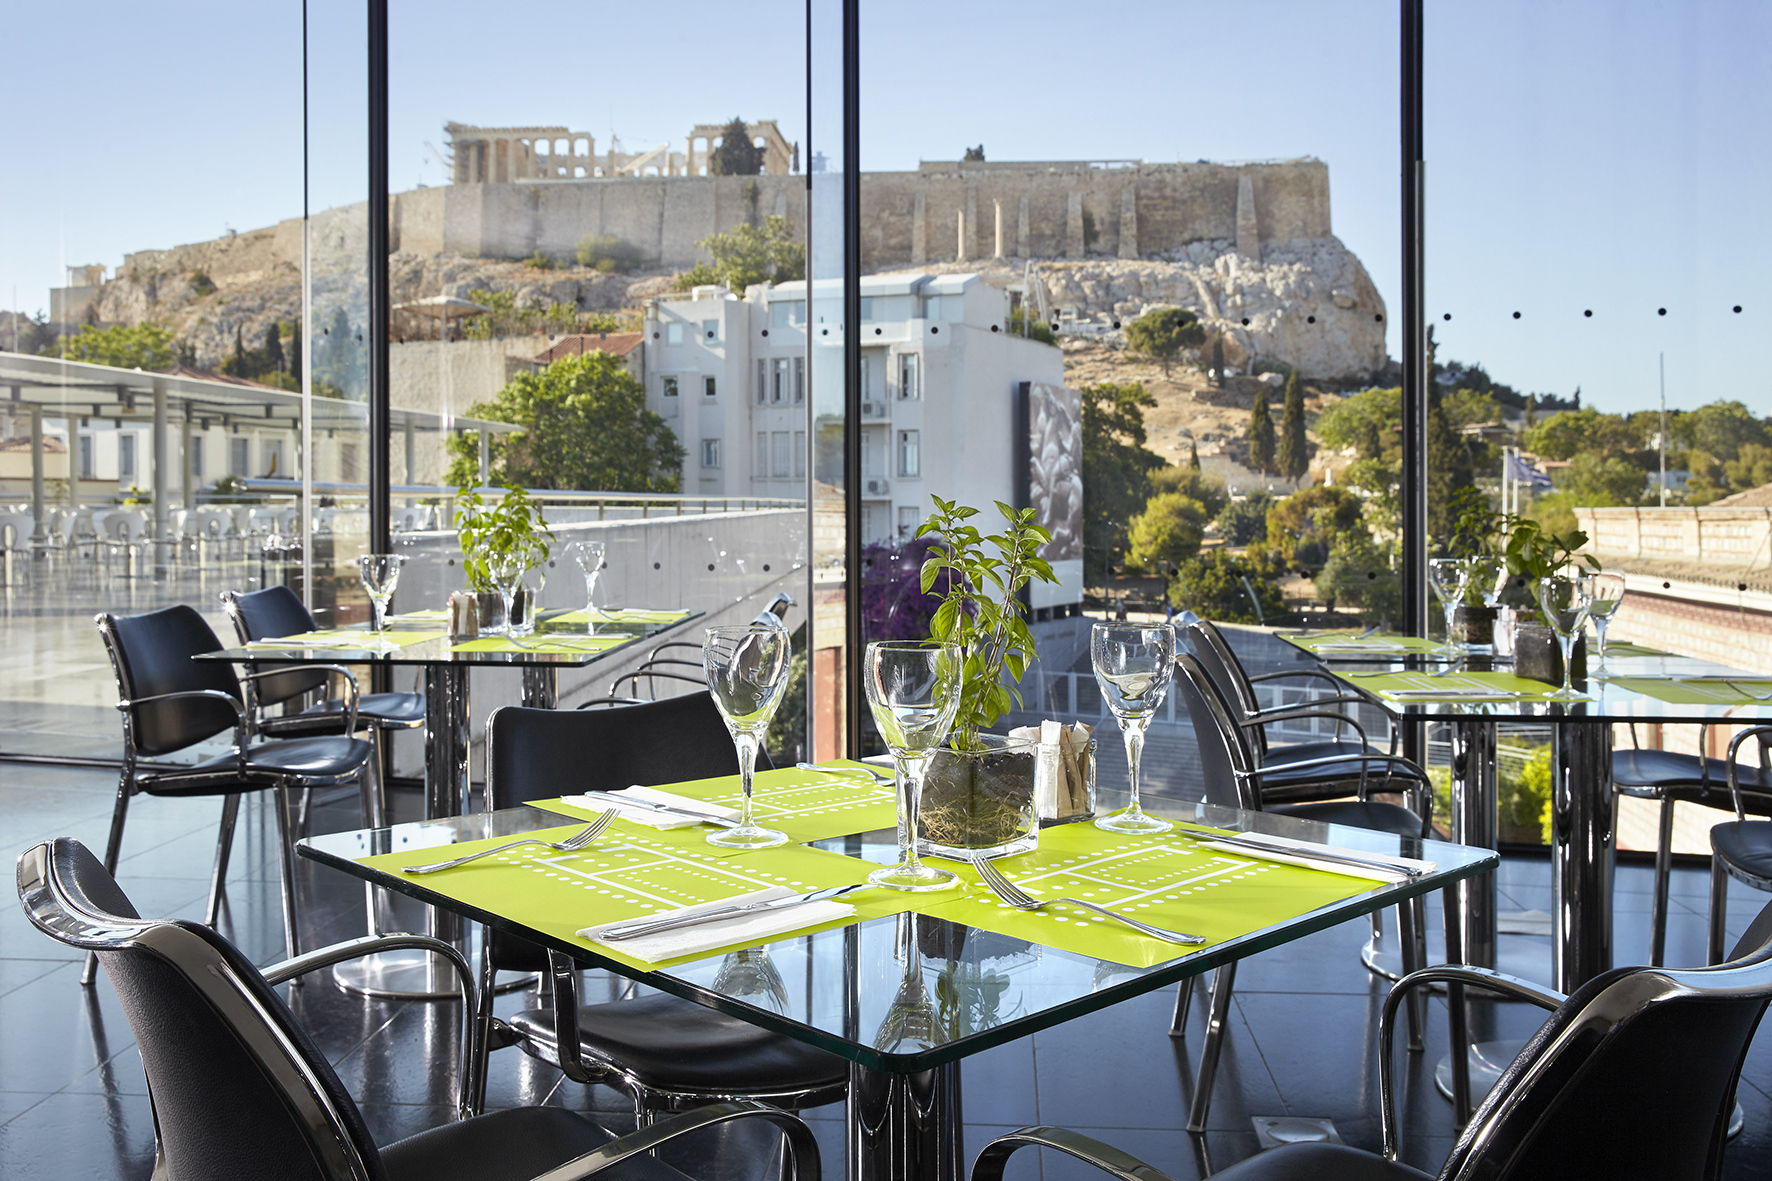 The Acropolis Museum Restaurant